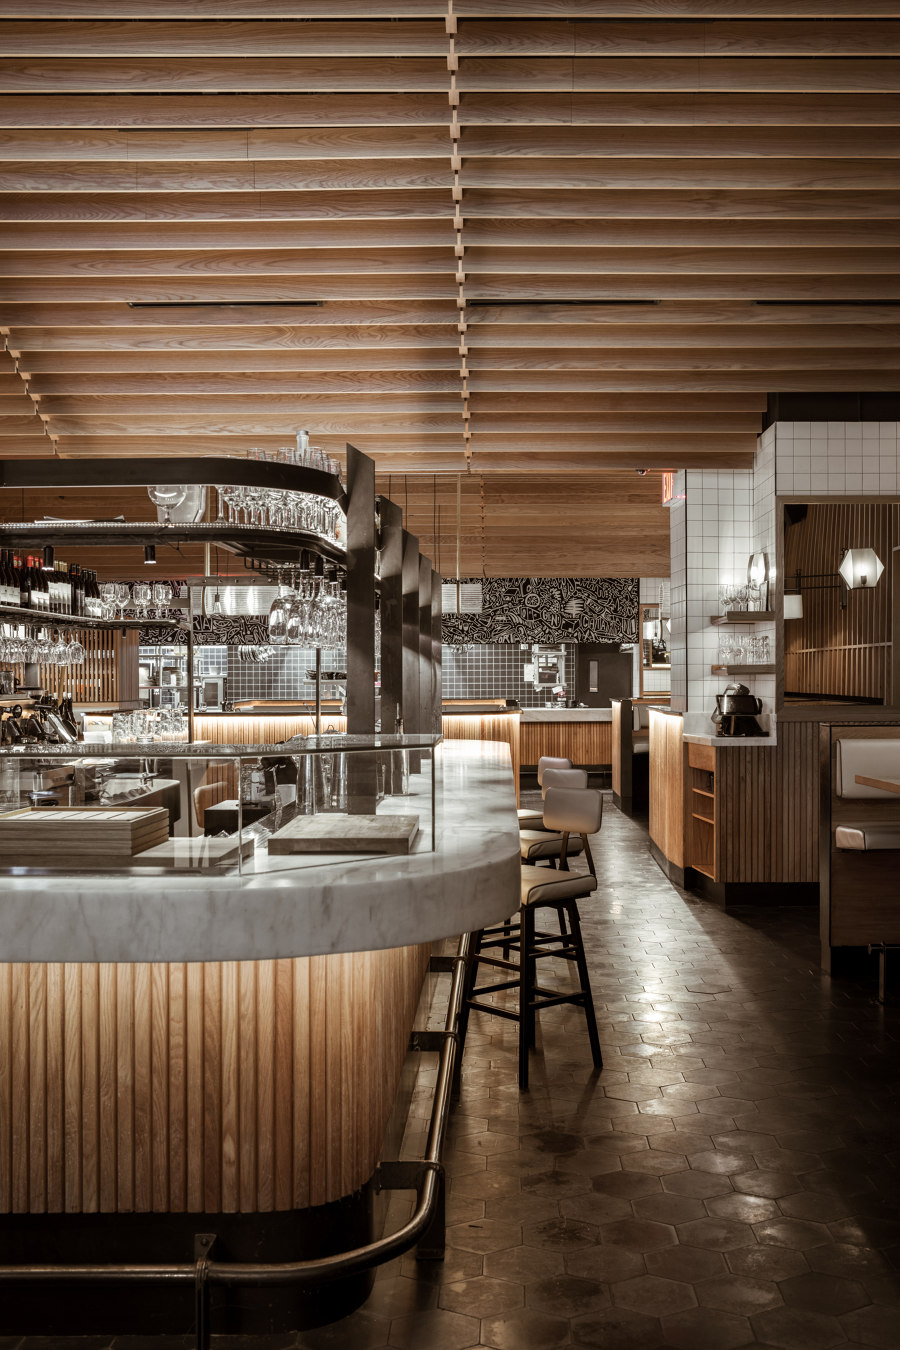 Boqueria Times Square de studio razavi architecture | Diseño de restaurantes